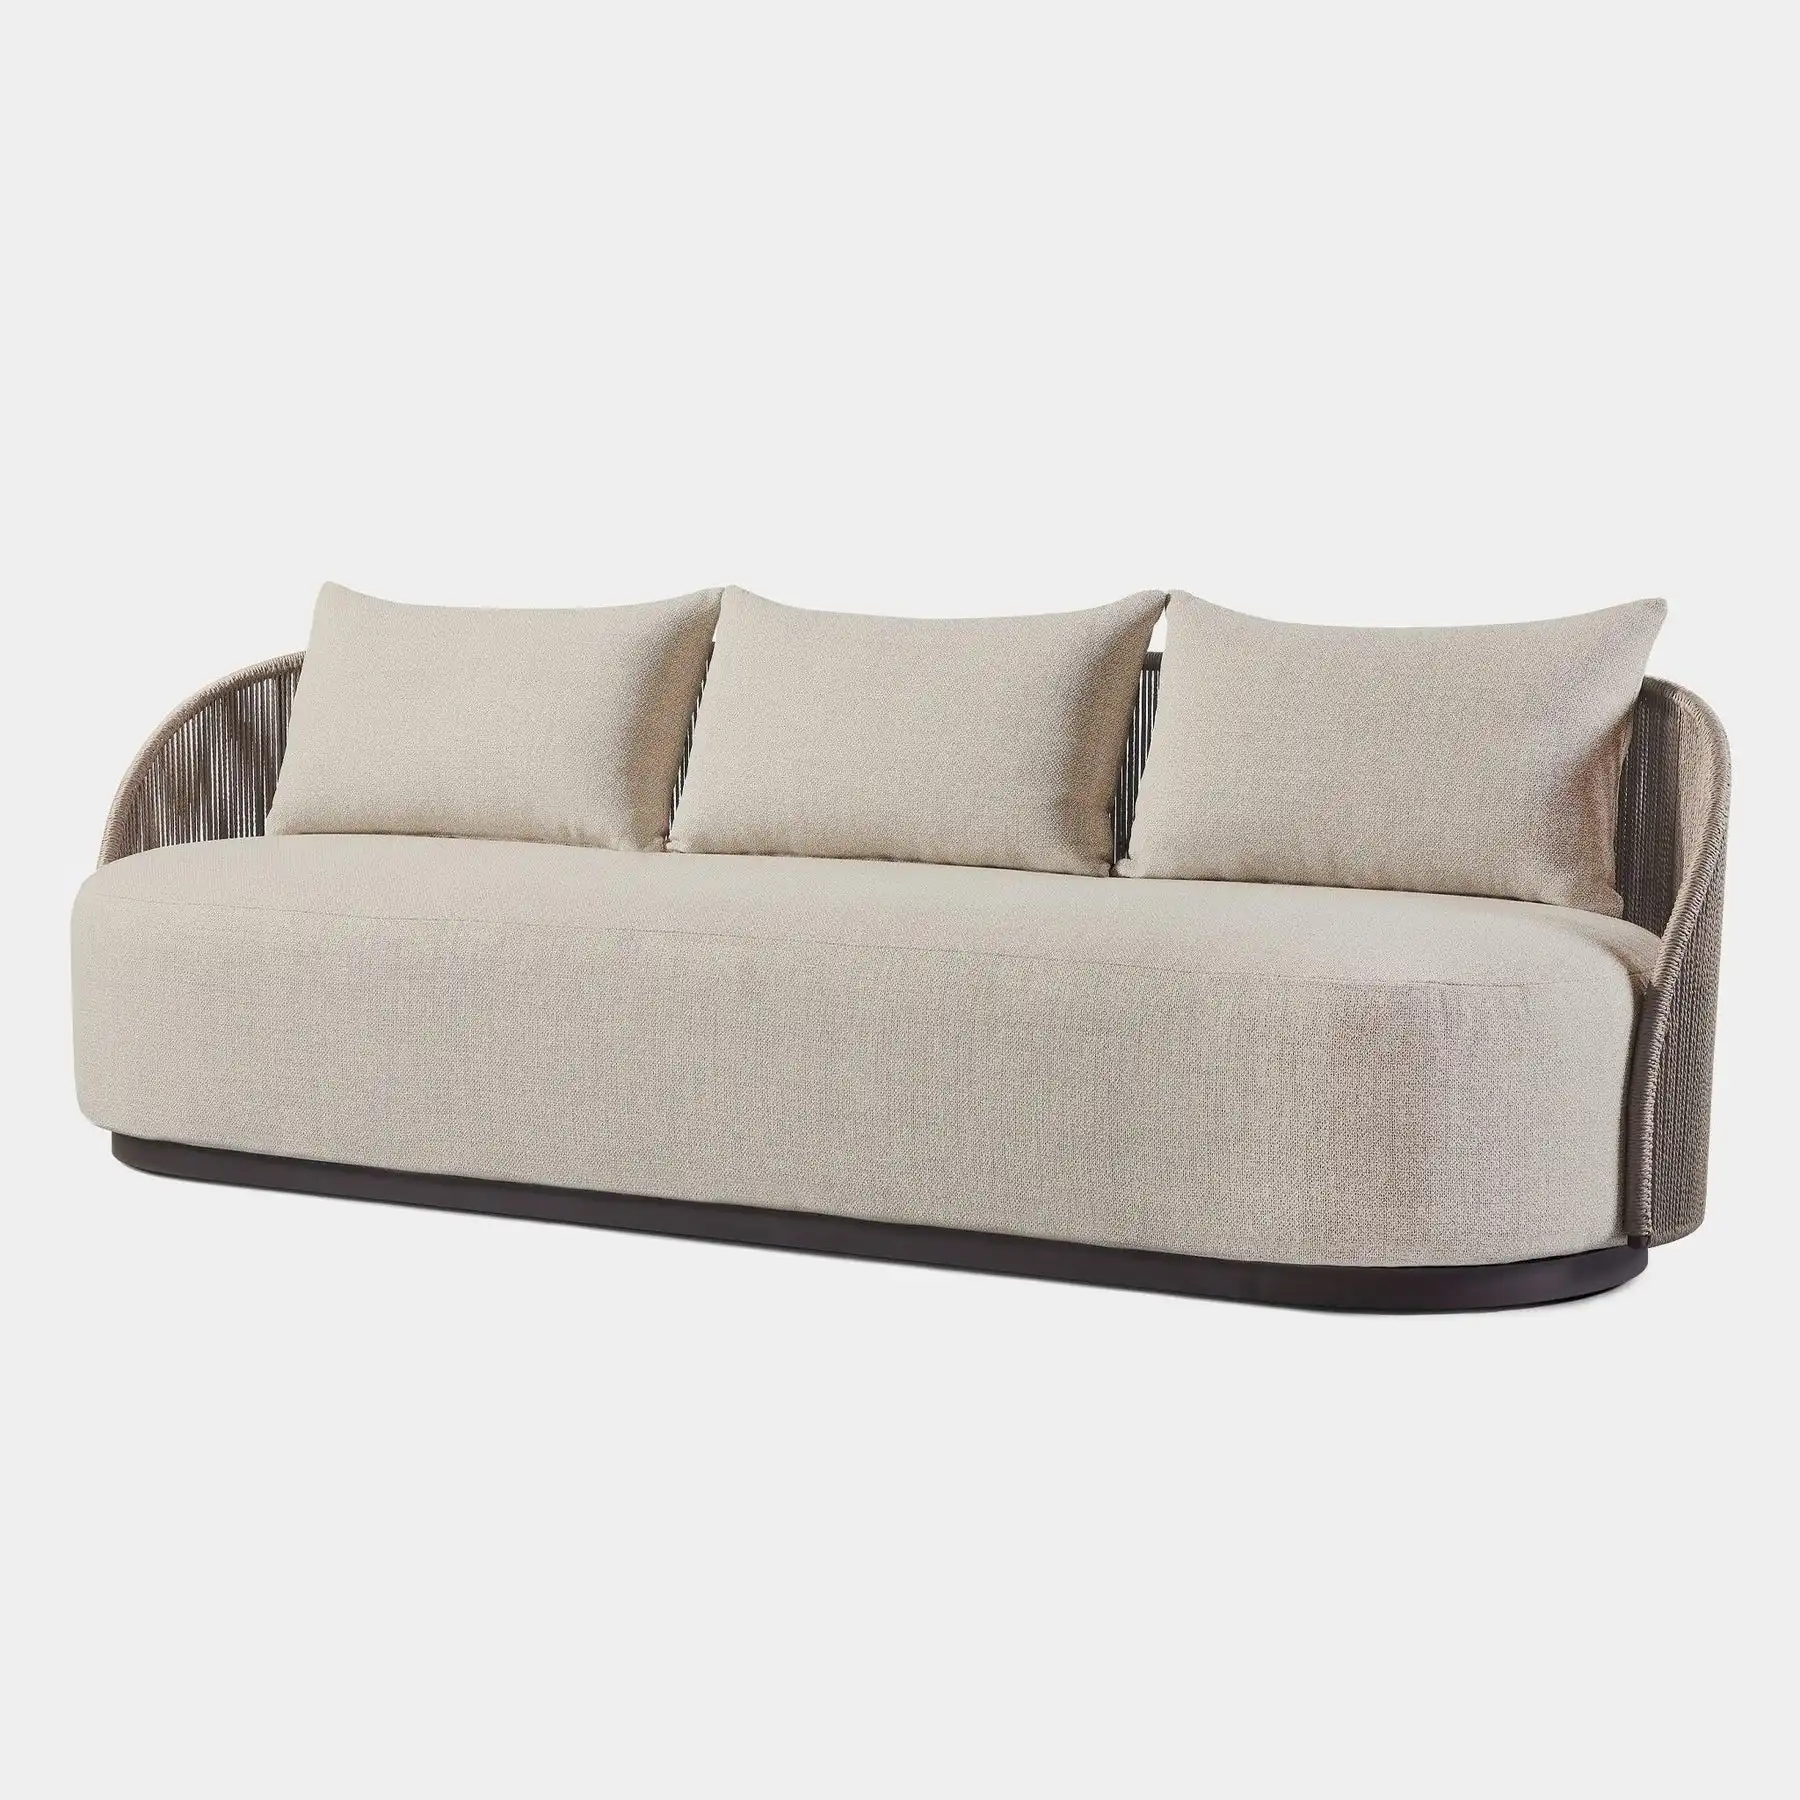 Customized Aluminum Garden Set New Design Outdoor Patio Furniture Olefin Rope 3 Seat Sofa